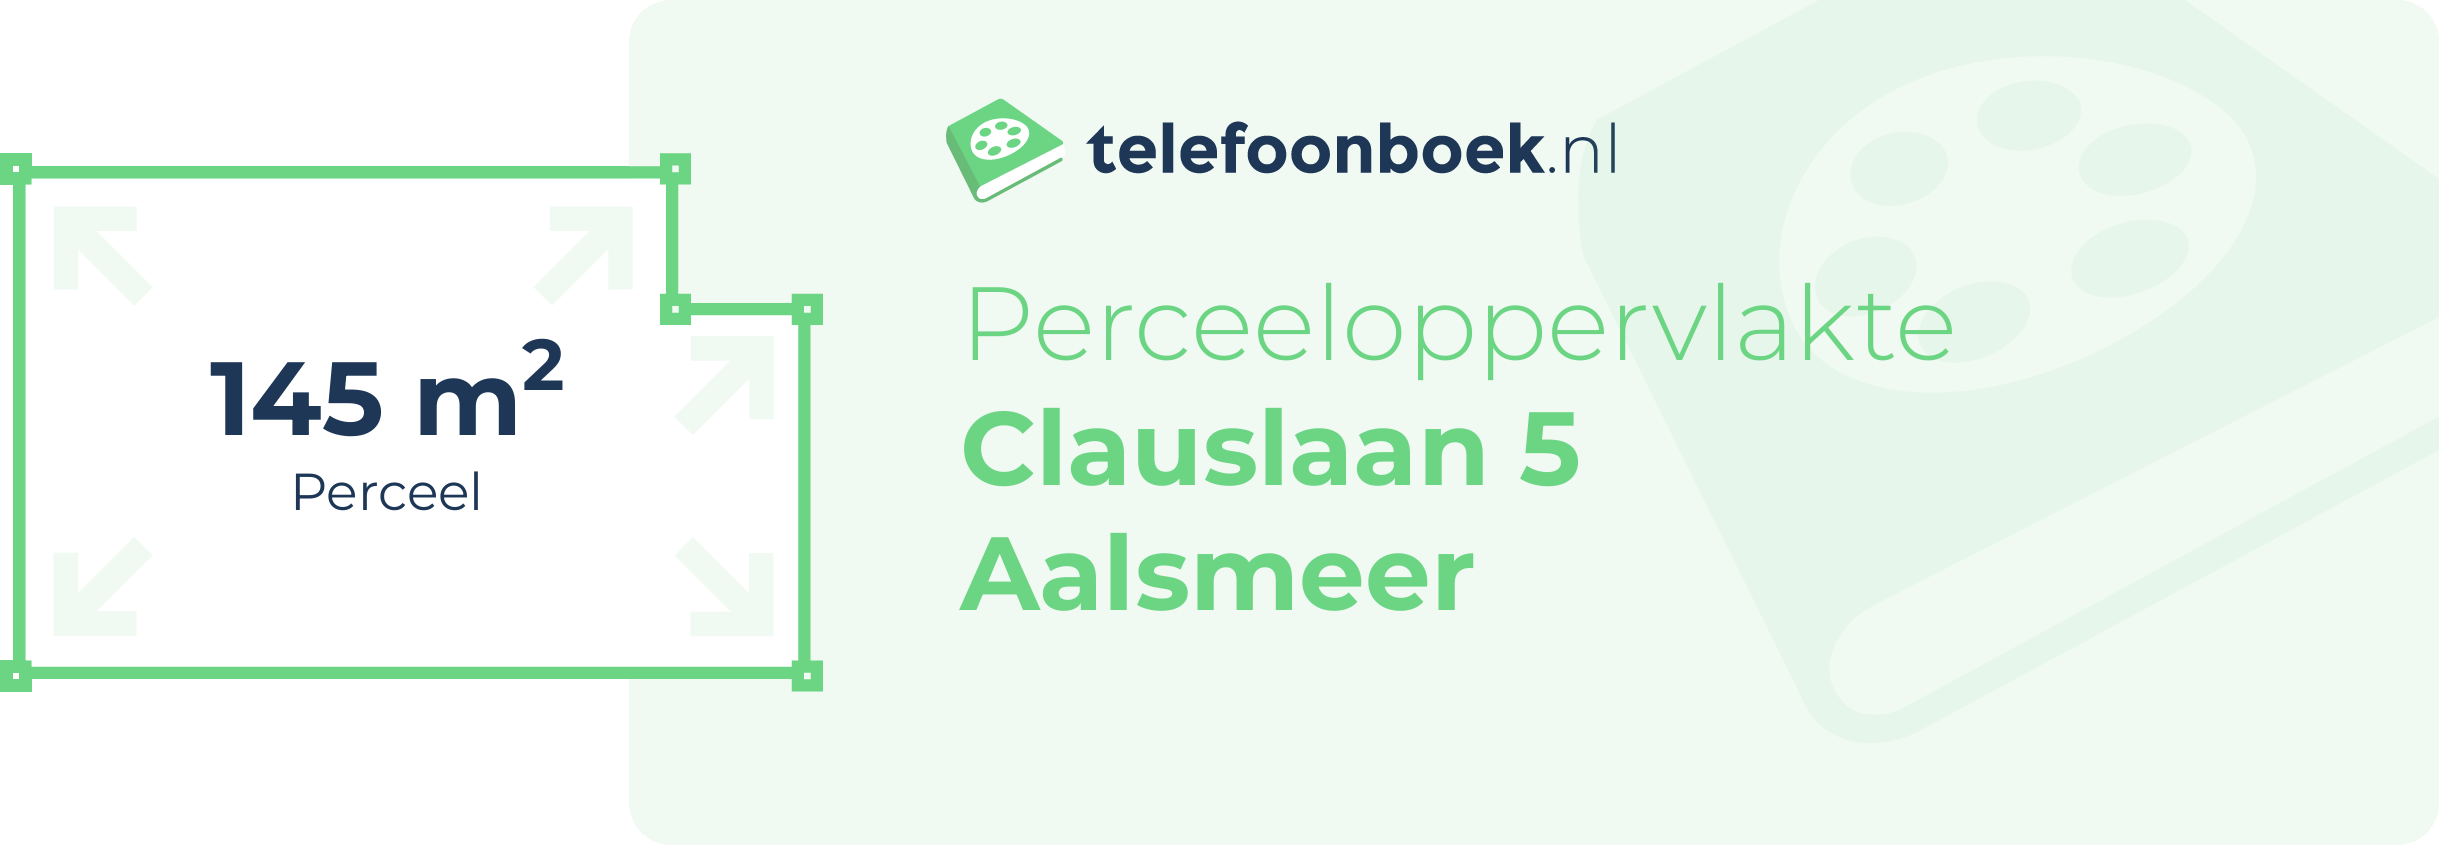 Perceeloppervlakte Clauslaan 5 Aalsmeer